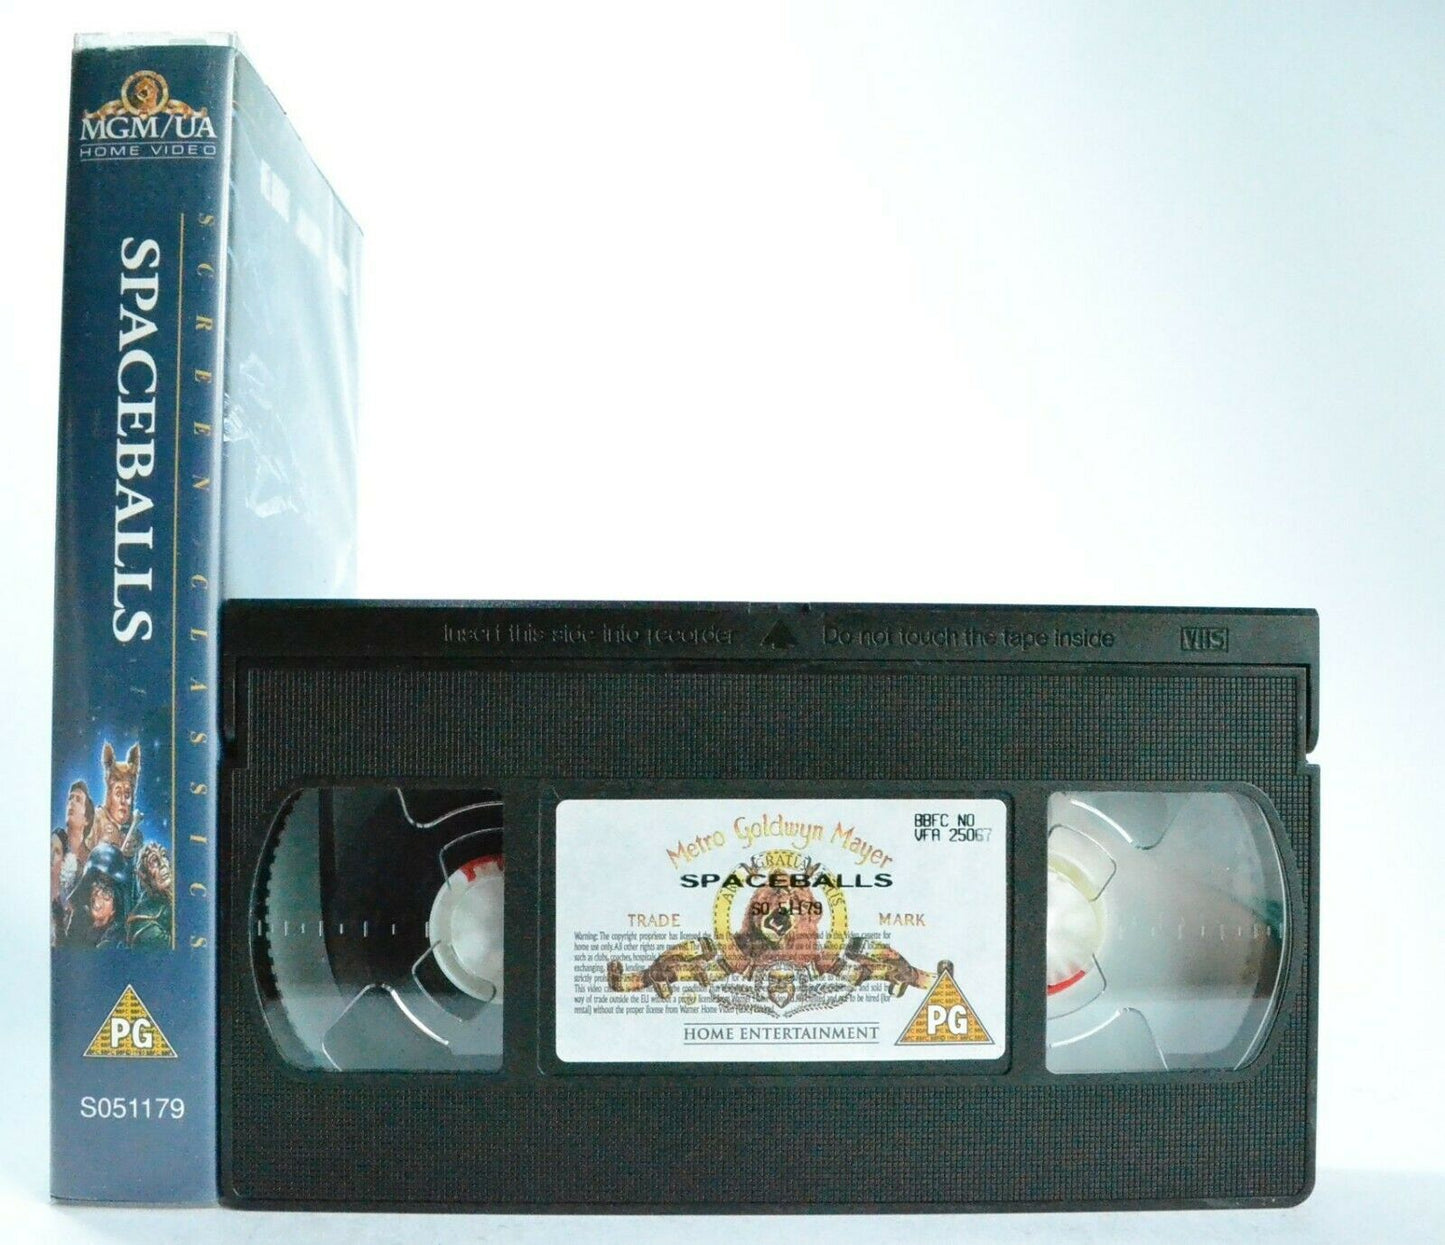 Spaceballs: Film By M.Brooks - MGM/UA (1987) - Comedy Classic - J.Candy - VHS-